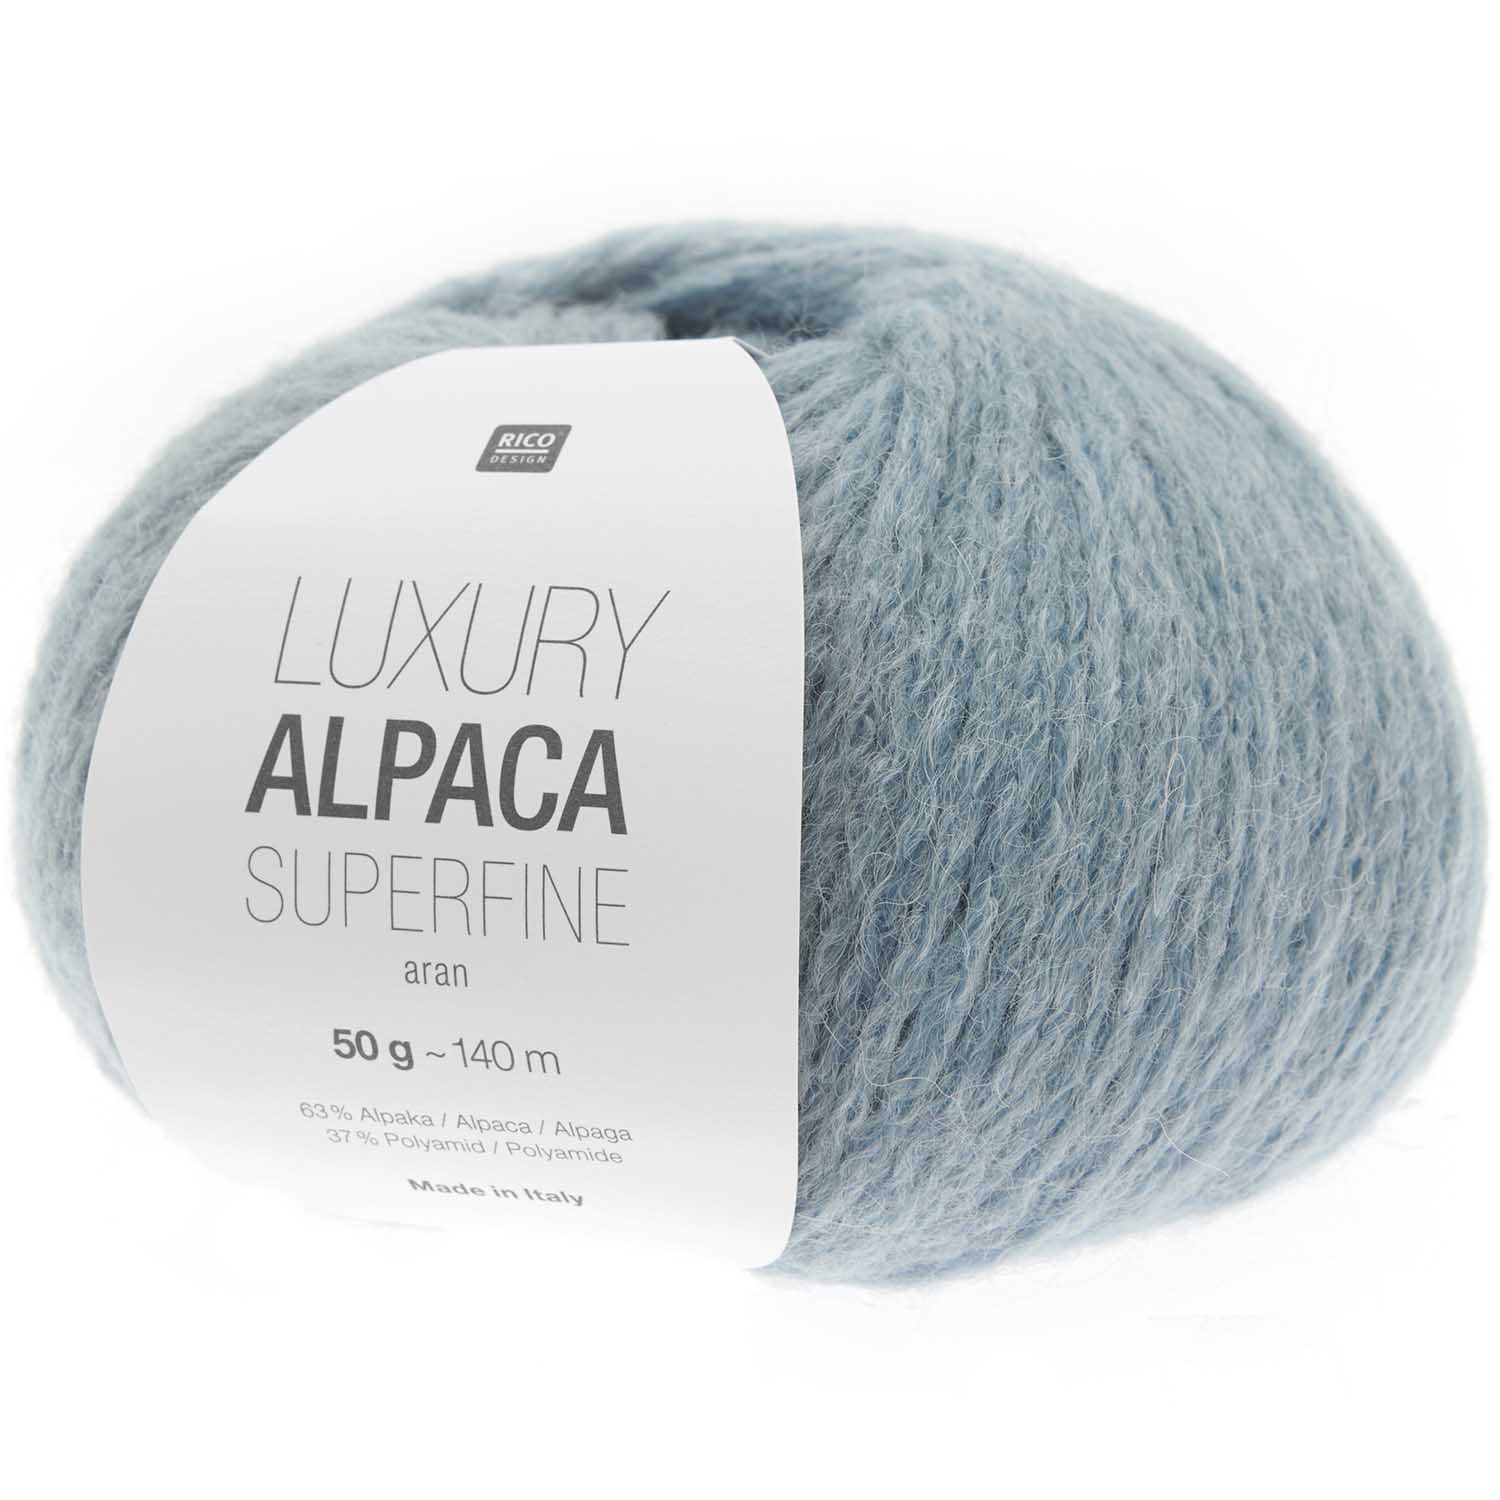 Rico Luxury Alpaca Superfine Aran 652 Mens Sweater Hat Scarf